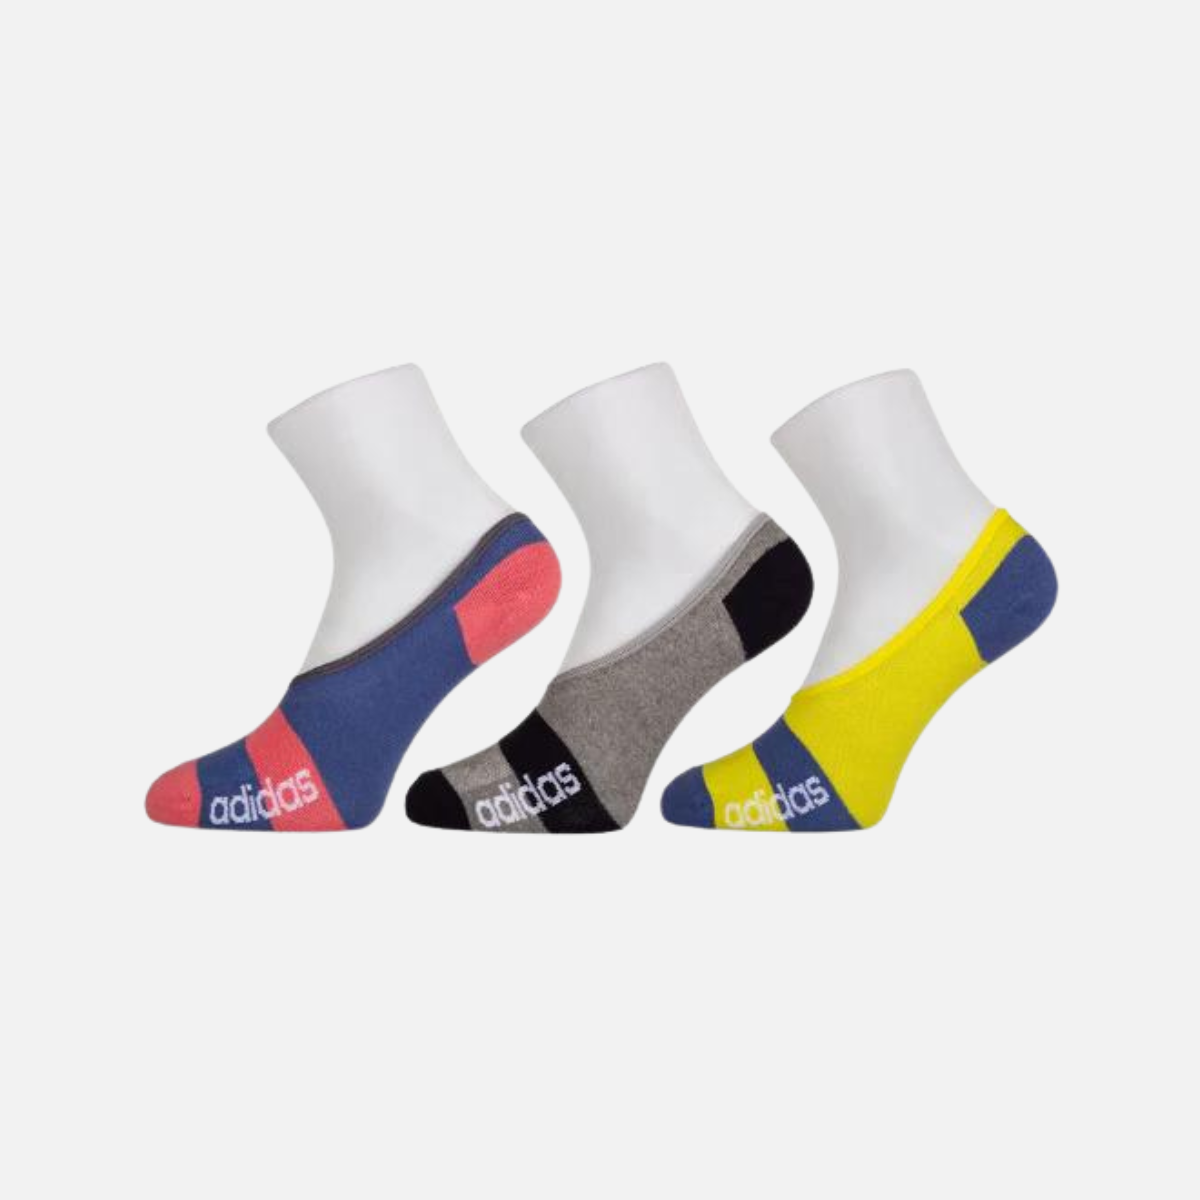 Adidas Flat Knit No Show Cotton Men's Socks (3 Pair)